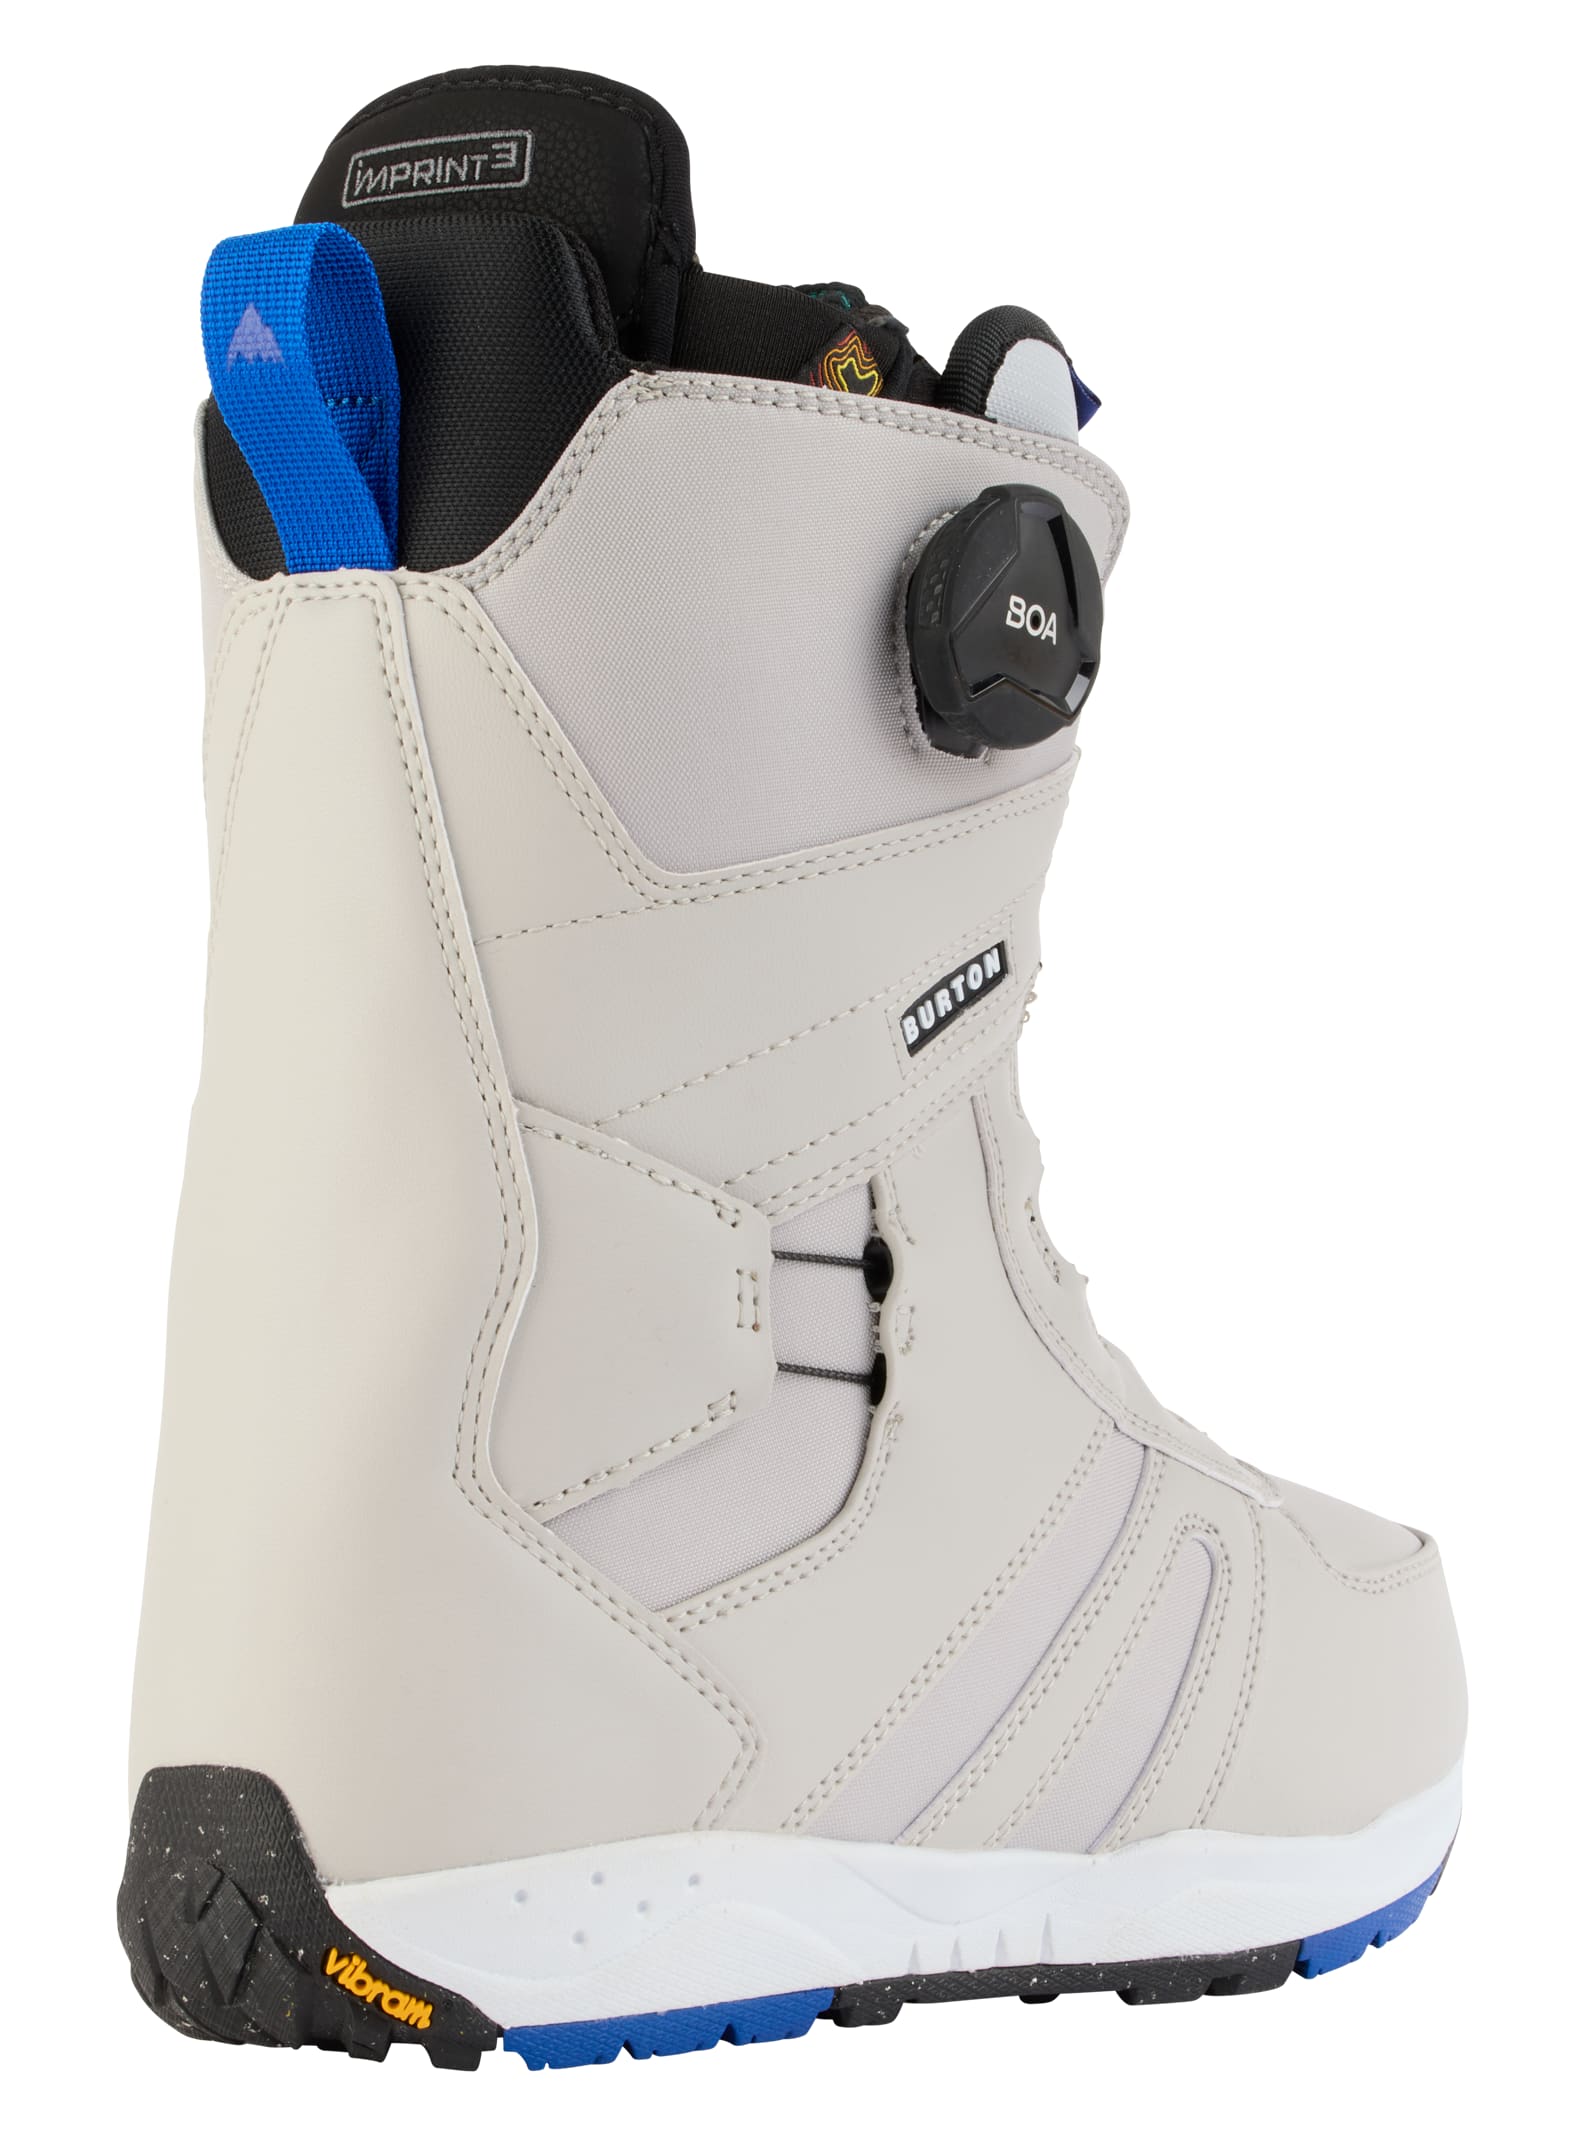 $150 Black Dragon X-ion Snowboard Boots Women 5.5 6.5 Euro 36 37+burton decal 